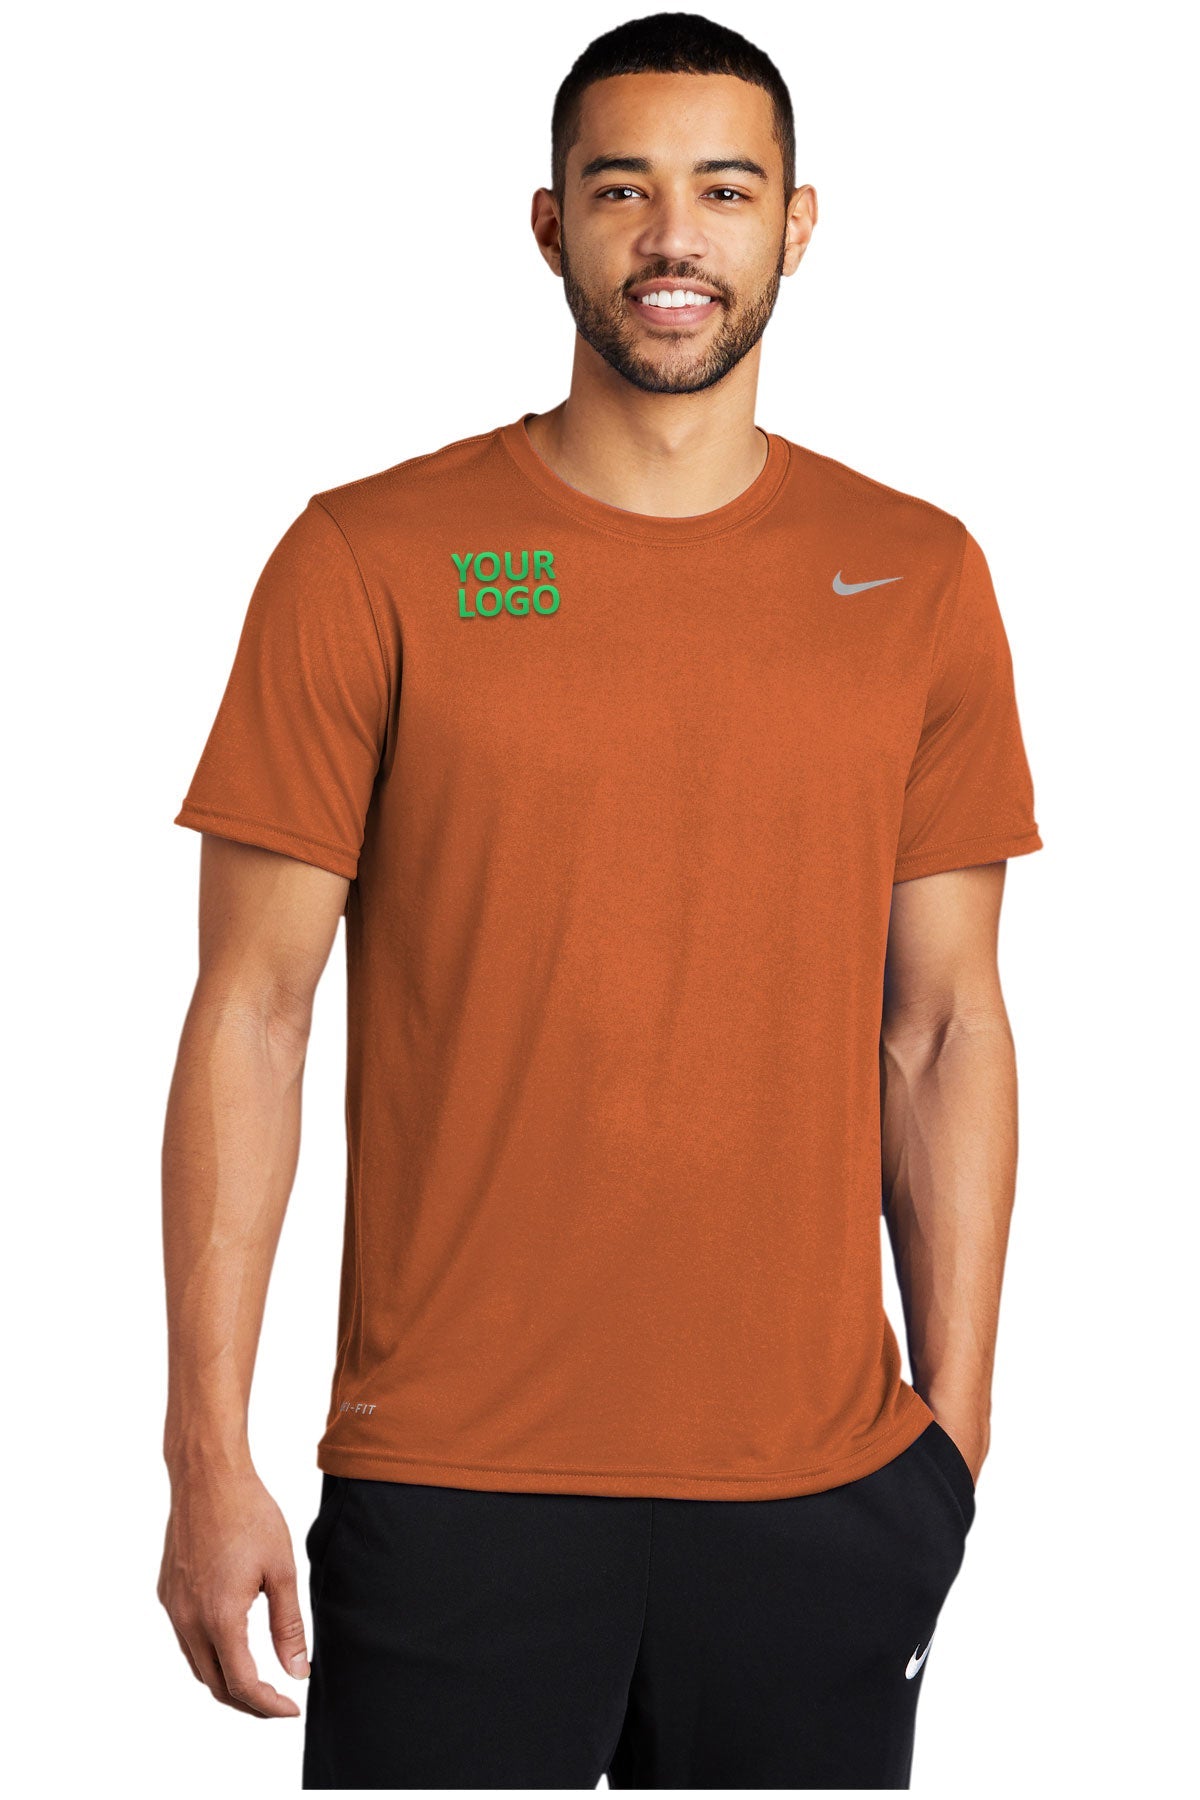 Nike Team rLegend Customized Tee's, Desert Orange